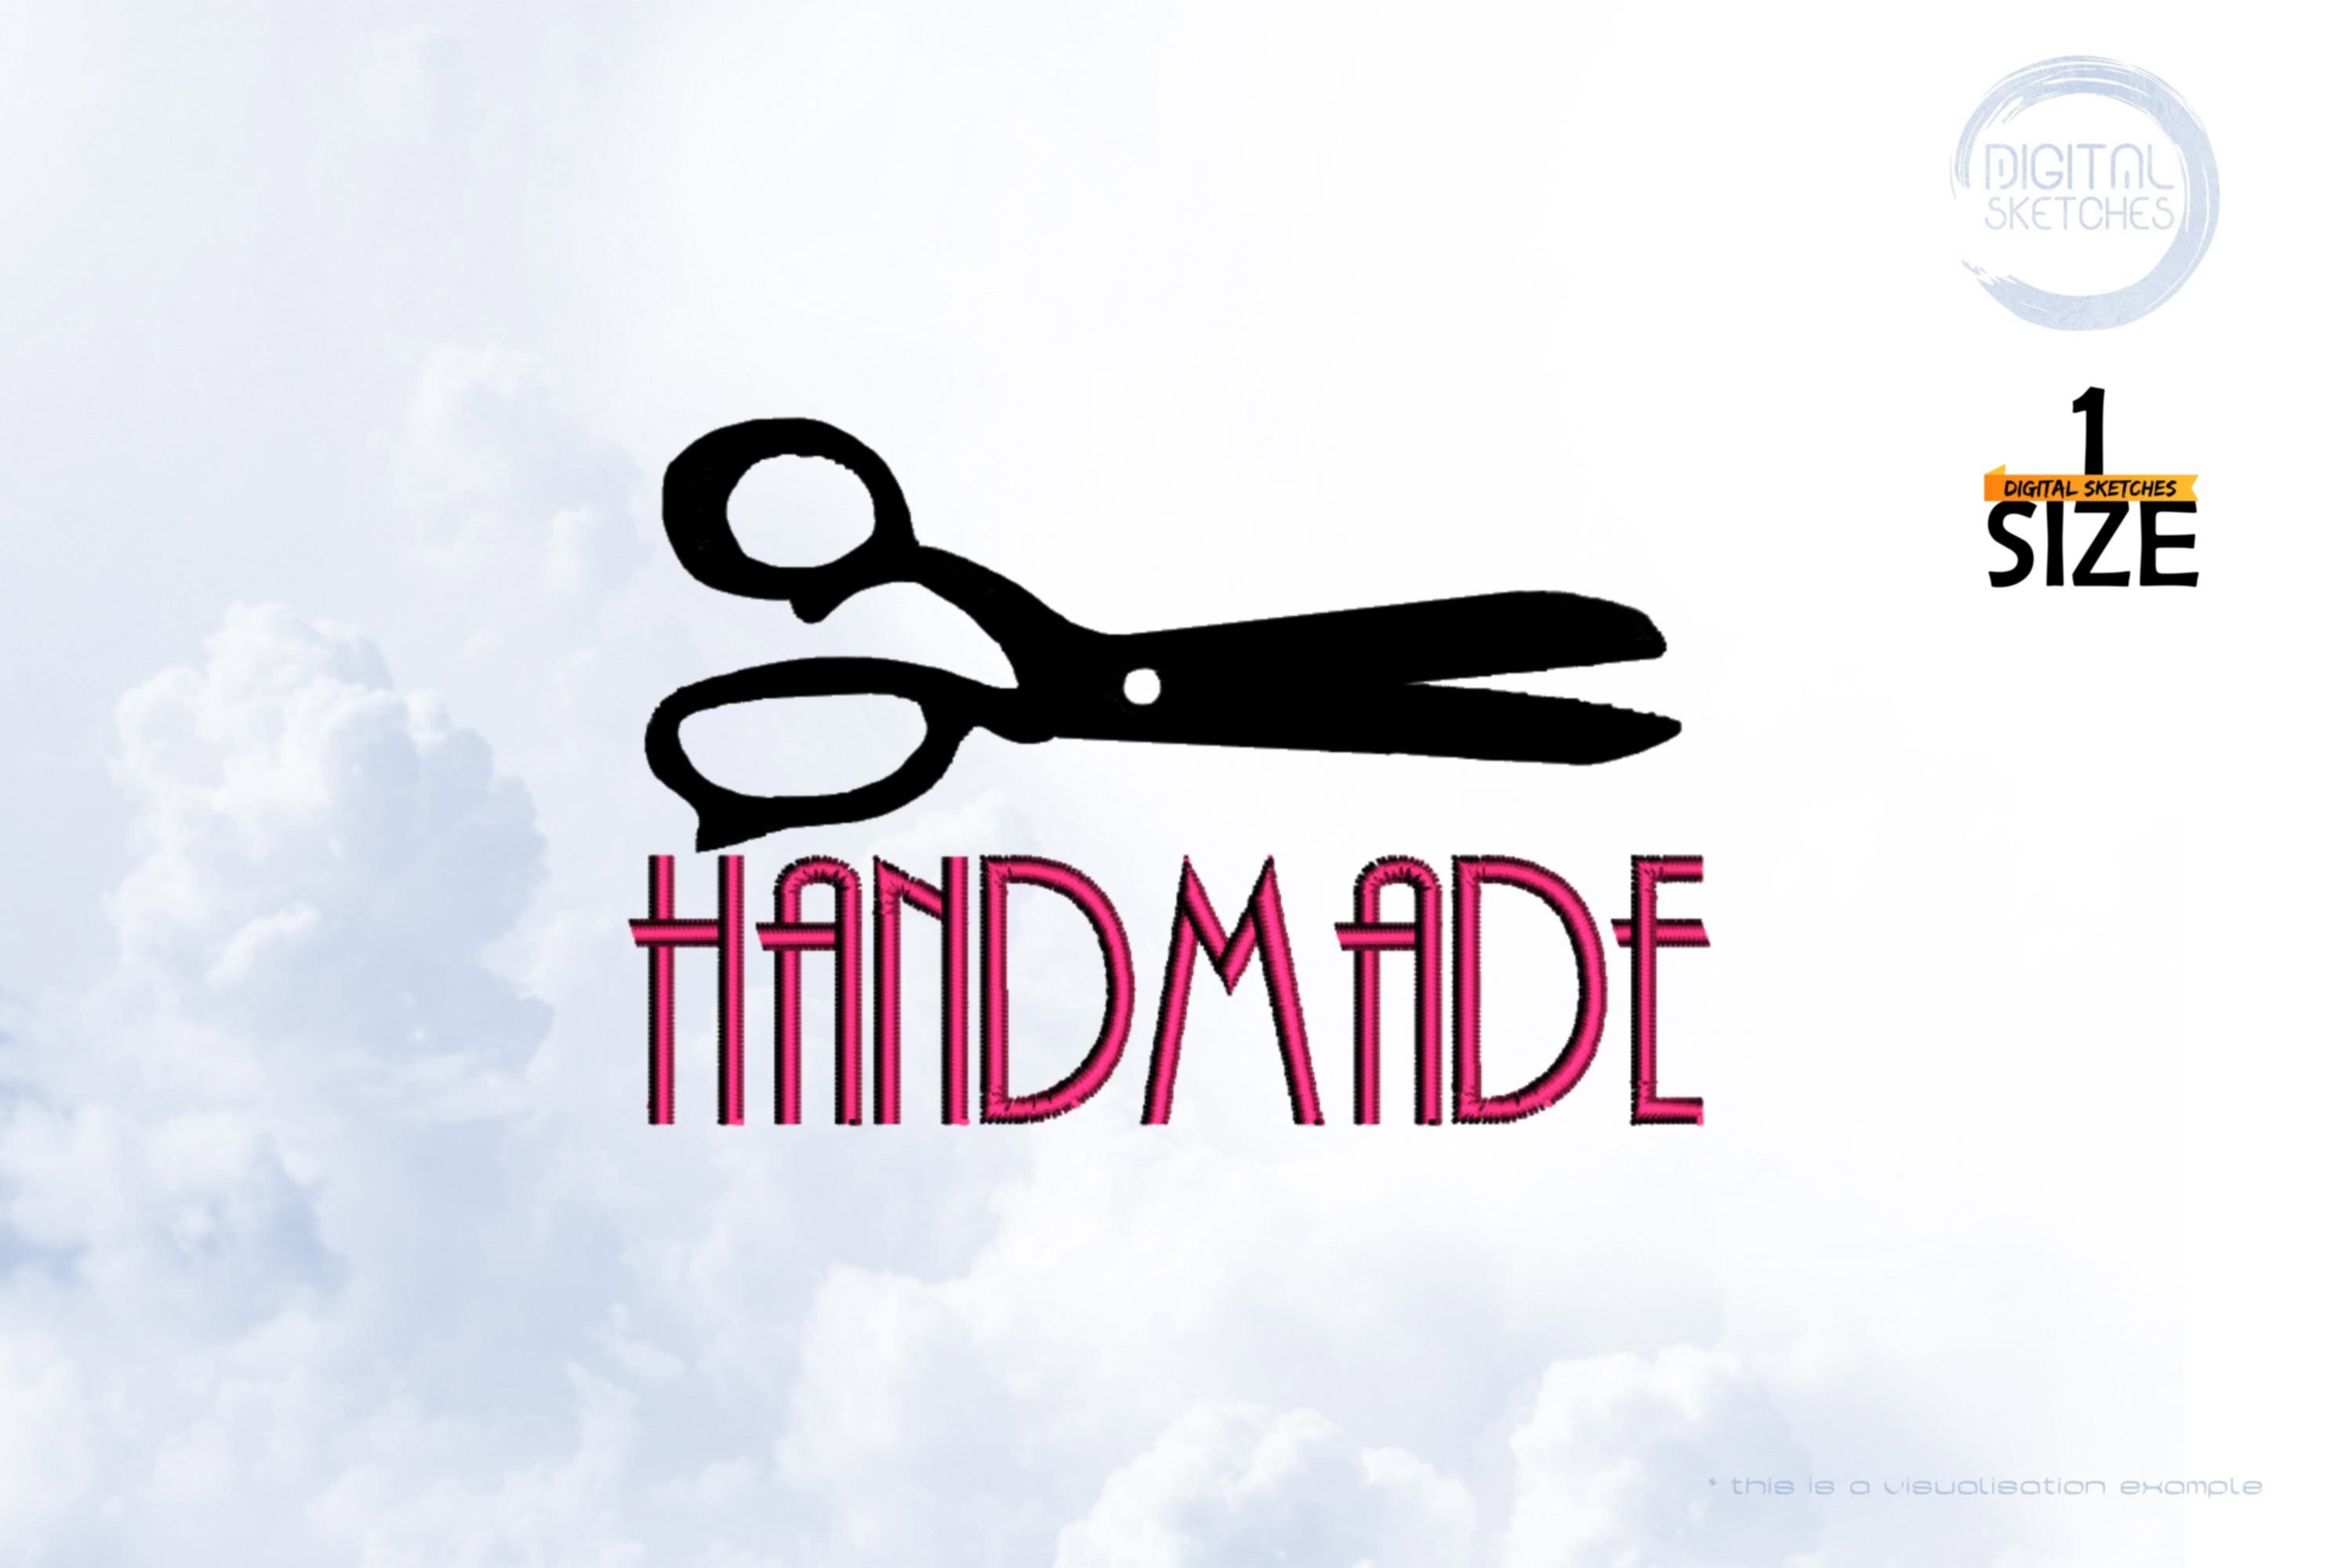 Handmade Sewing Tailor Scissors